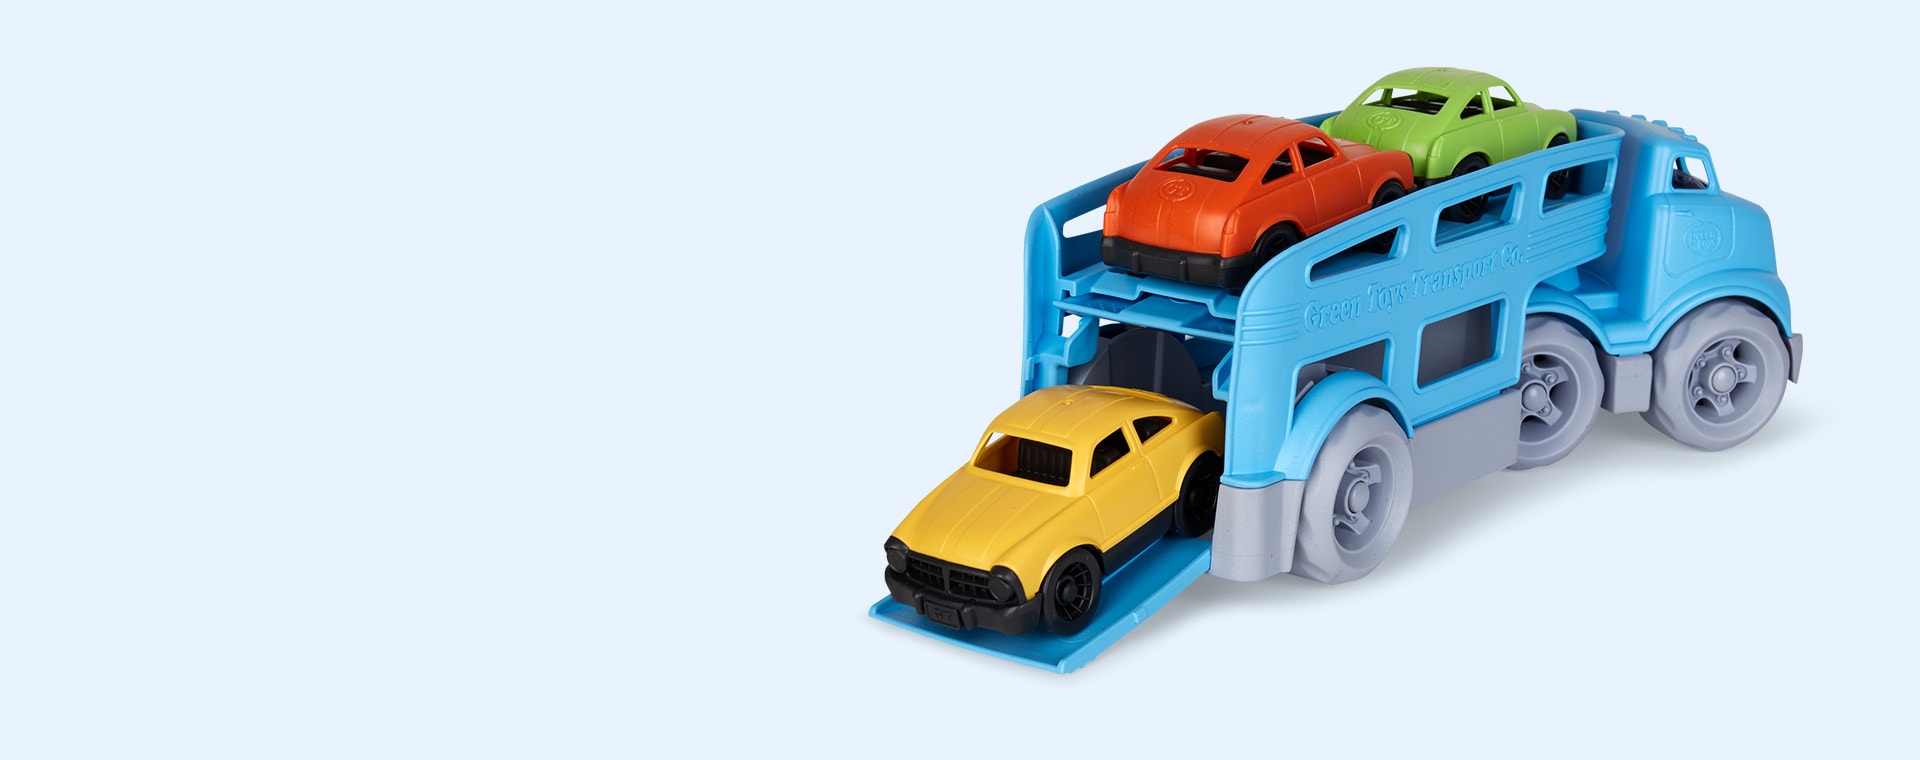 Blue Green Toys Car Carrier